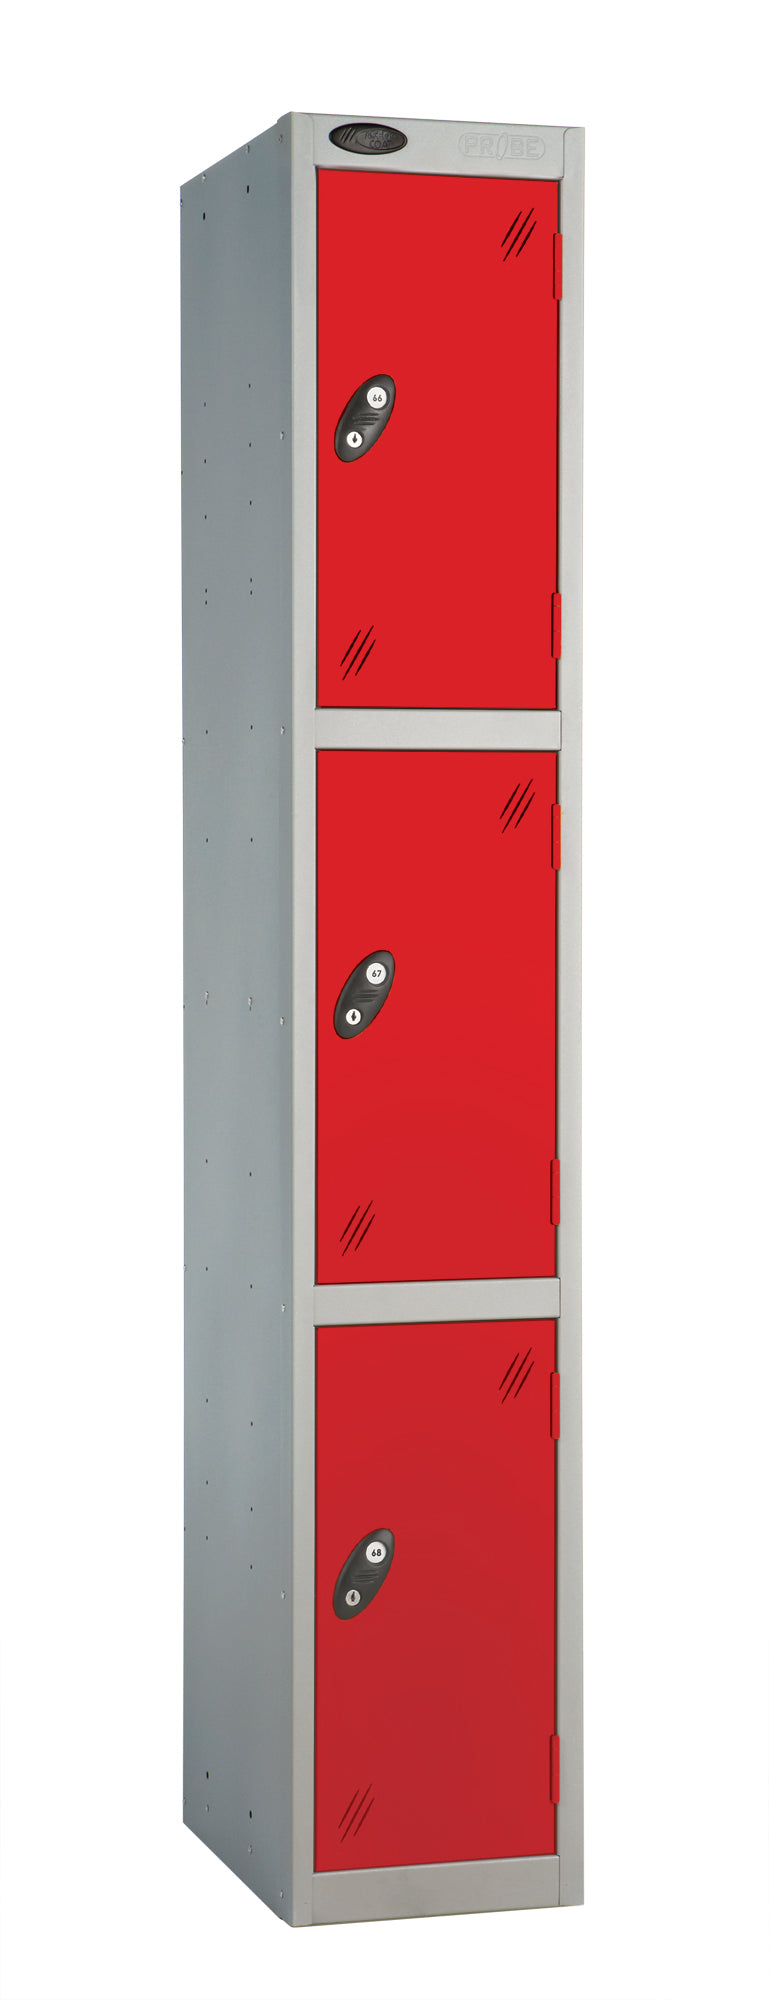 PROBEBOX STANDARD 1 NEST STEEL LOCKERS - FLAME RED 3 DOOR Storage Lockers > Lockers > Cabinets > Storage > Probe > One Stop For Safety   